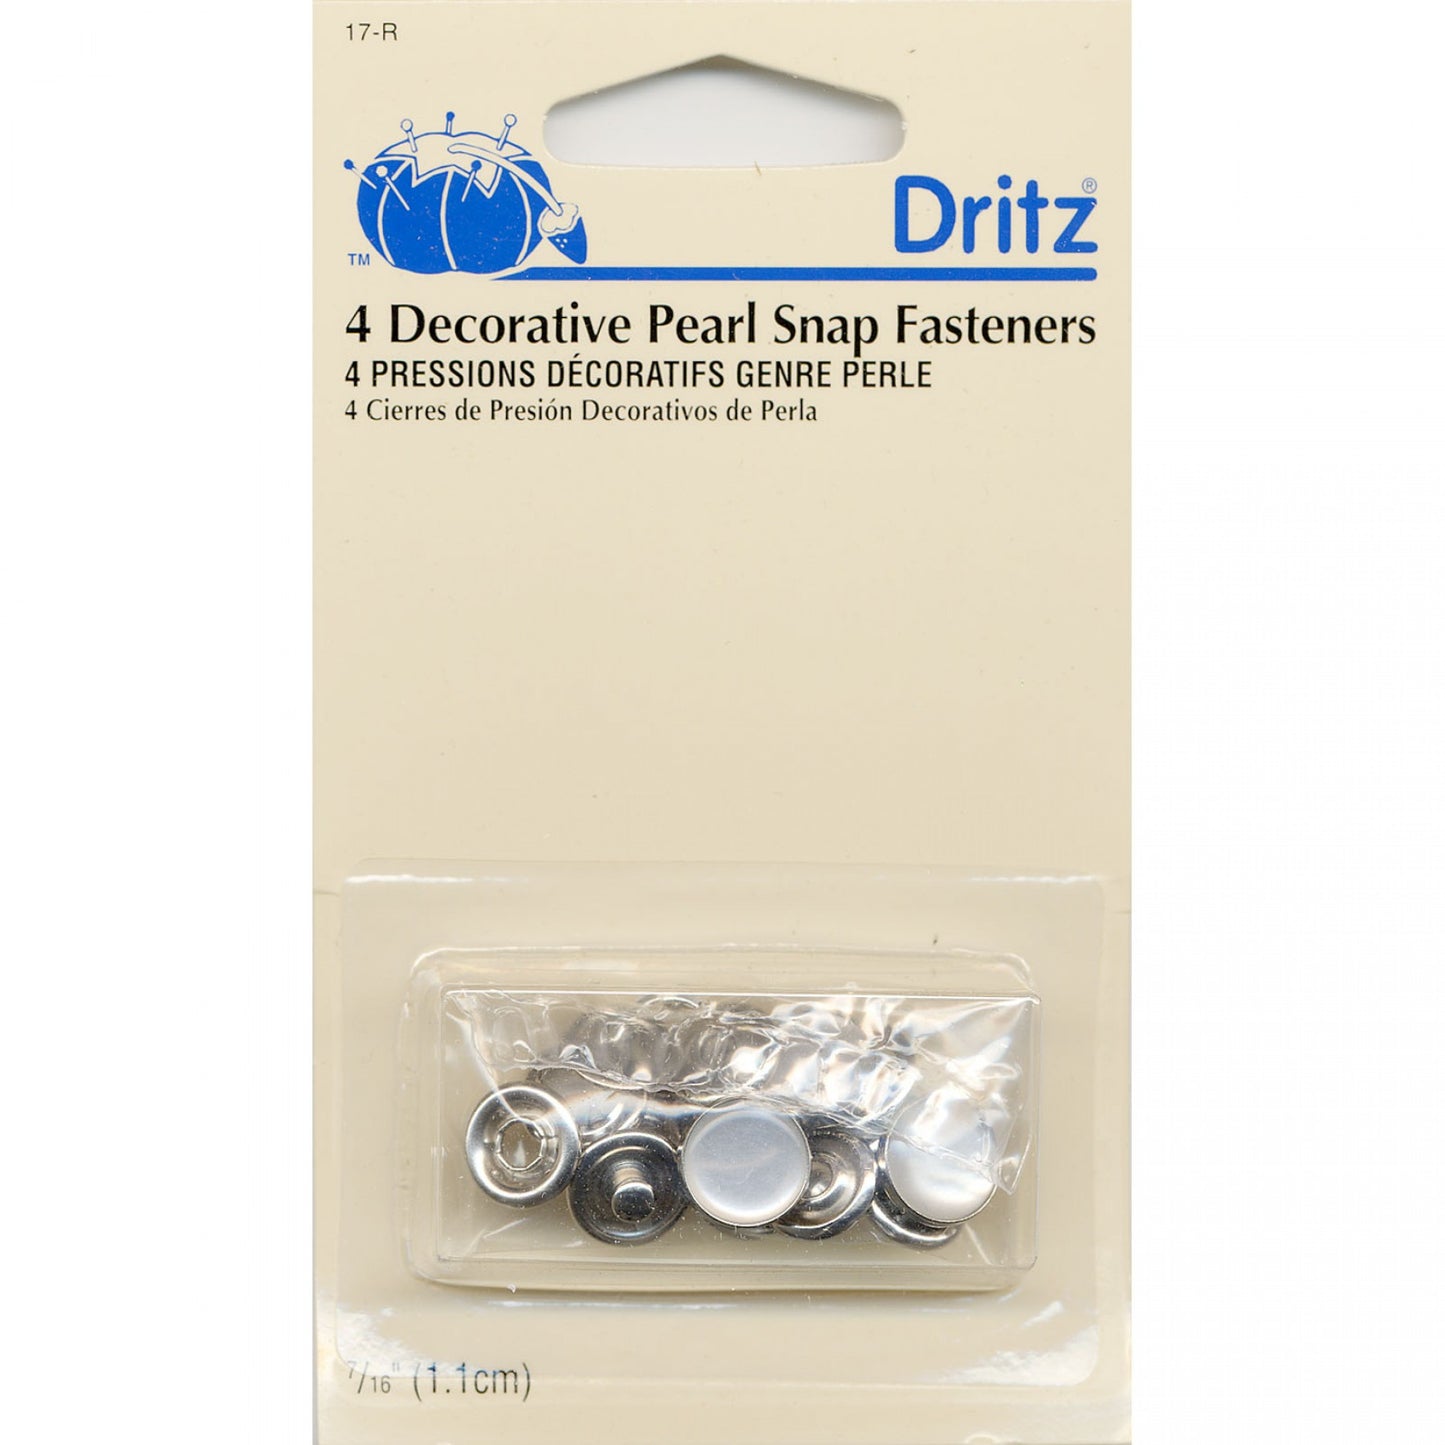 Dritz Decorative Pearl Snap Fastener sz 16, White - 4 pack